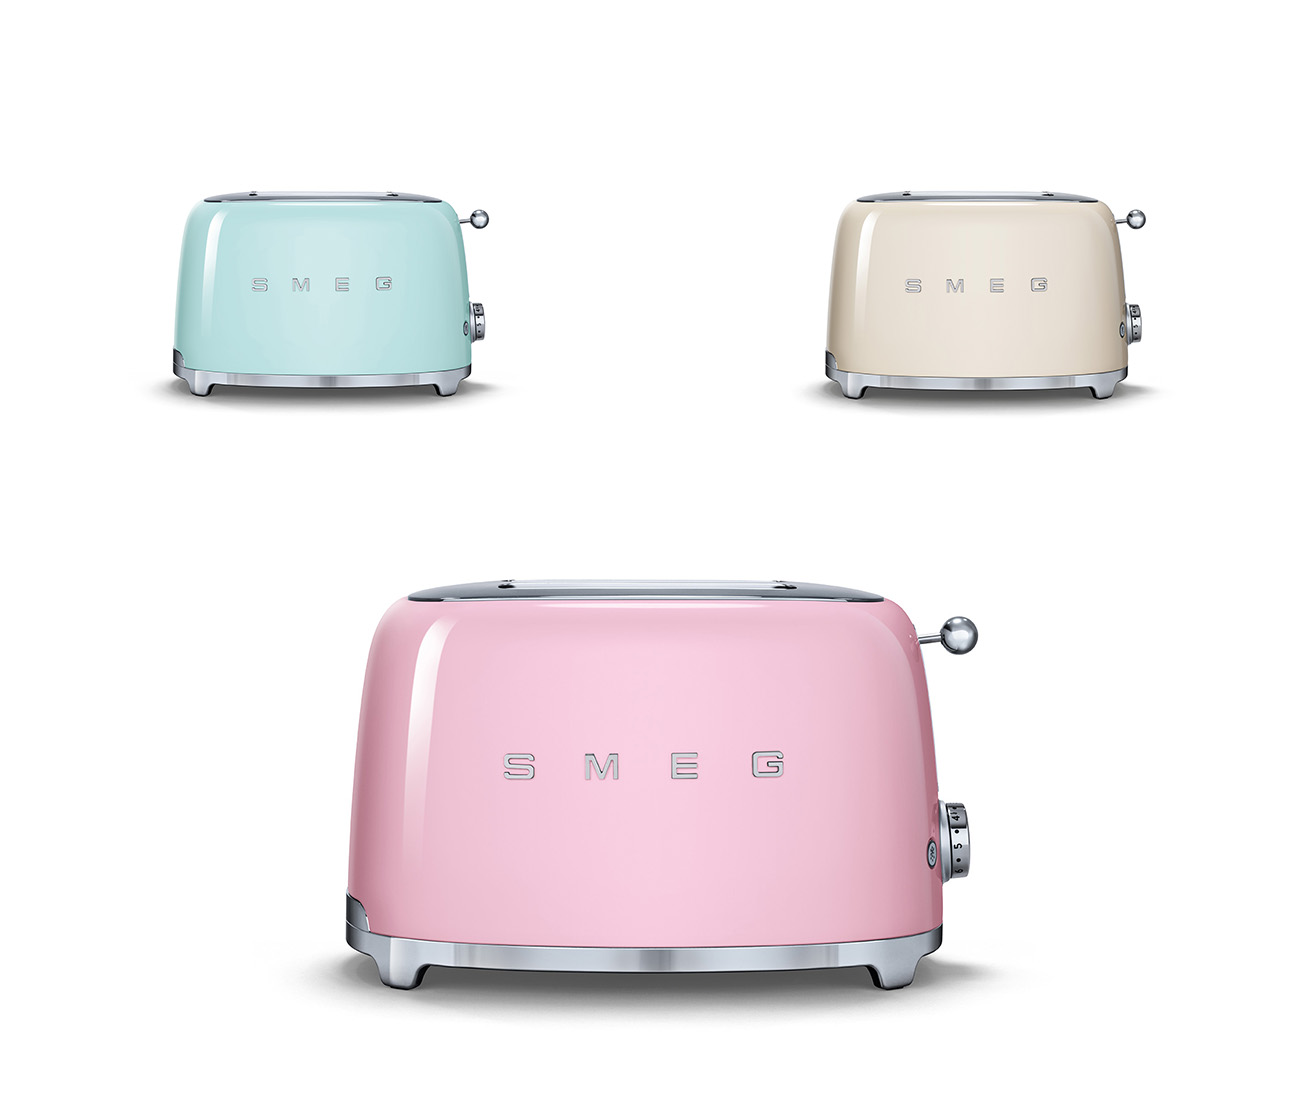 SMEG-Toaster-mint-creme-rosa